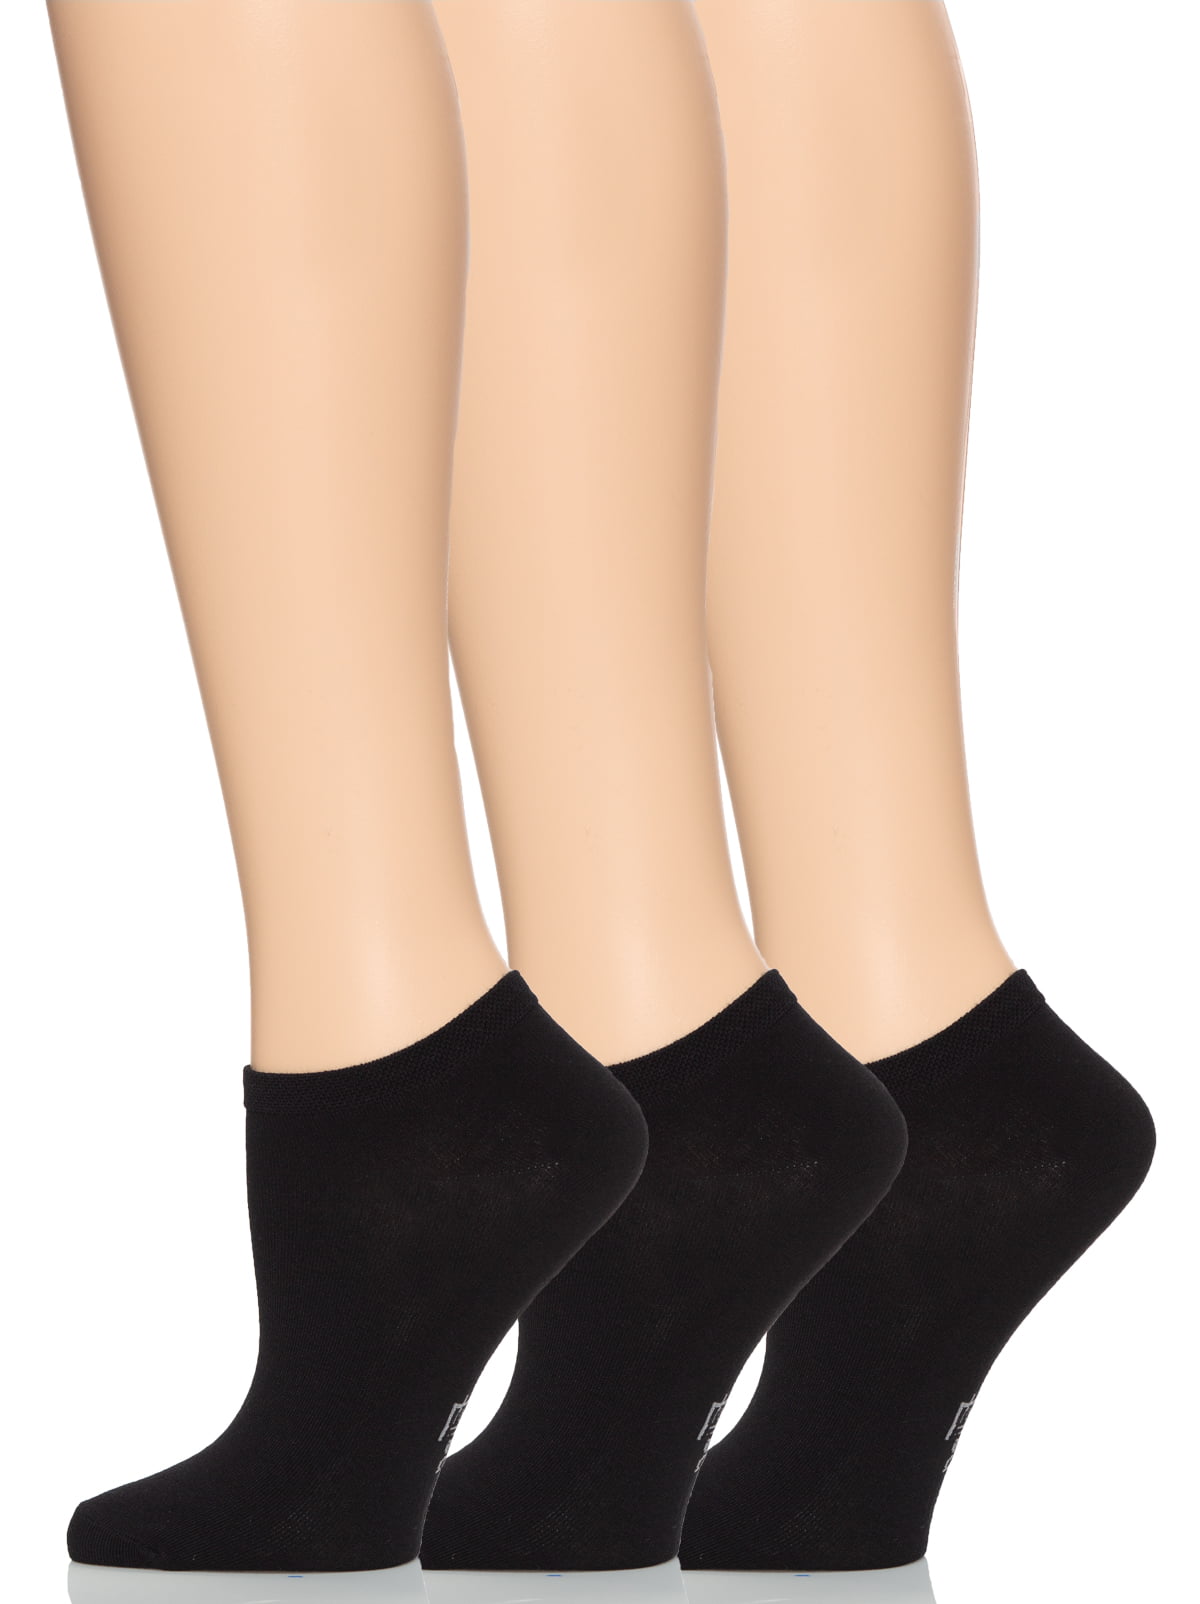 Felina | Women's No-Show Bamboo Socks | 3-Pack (Black, One Size ...